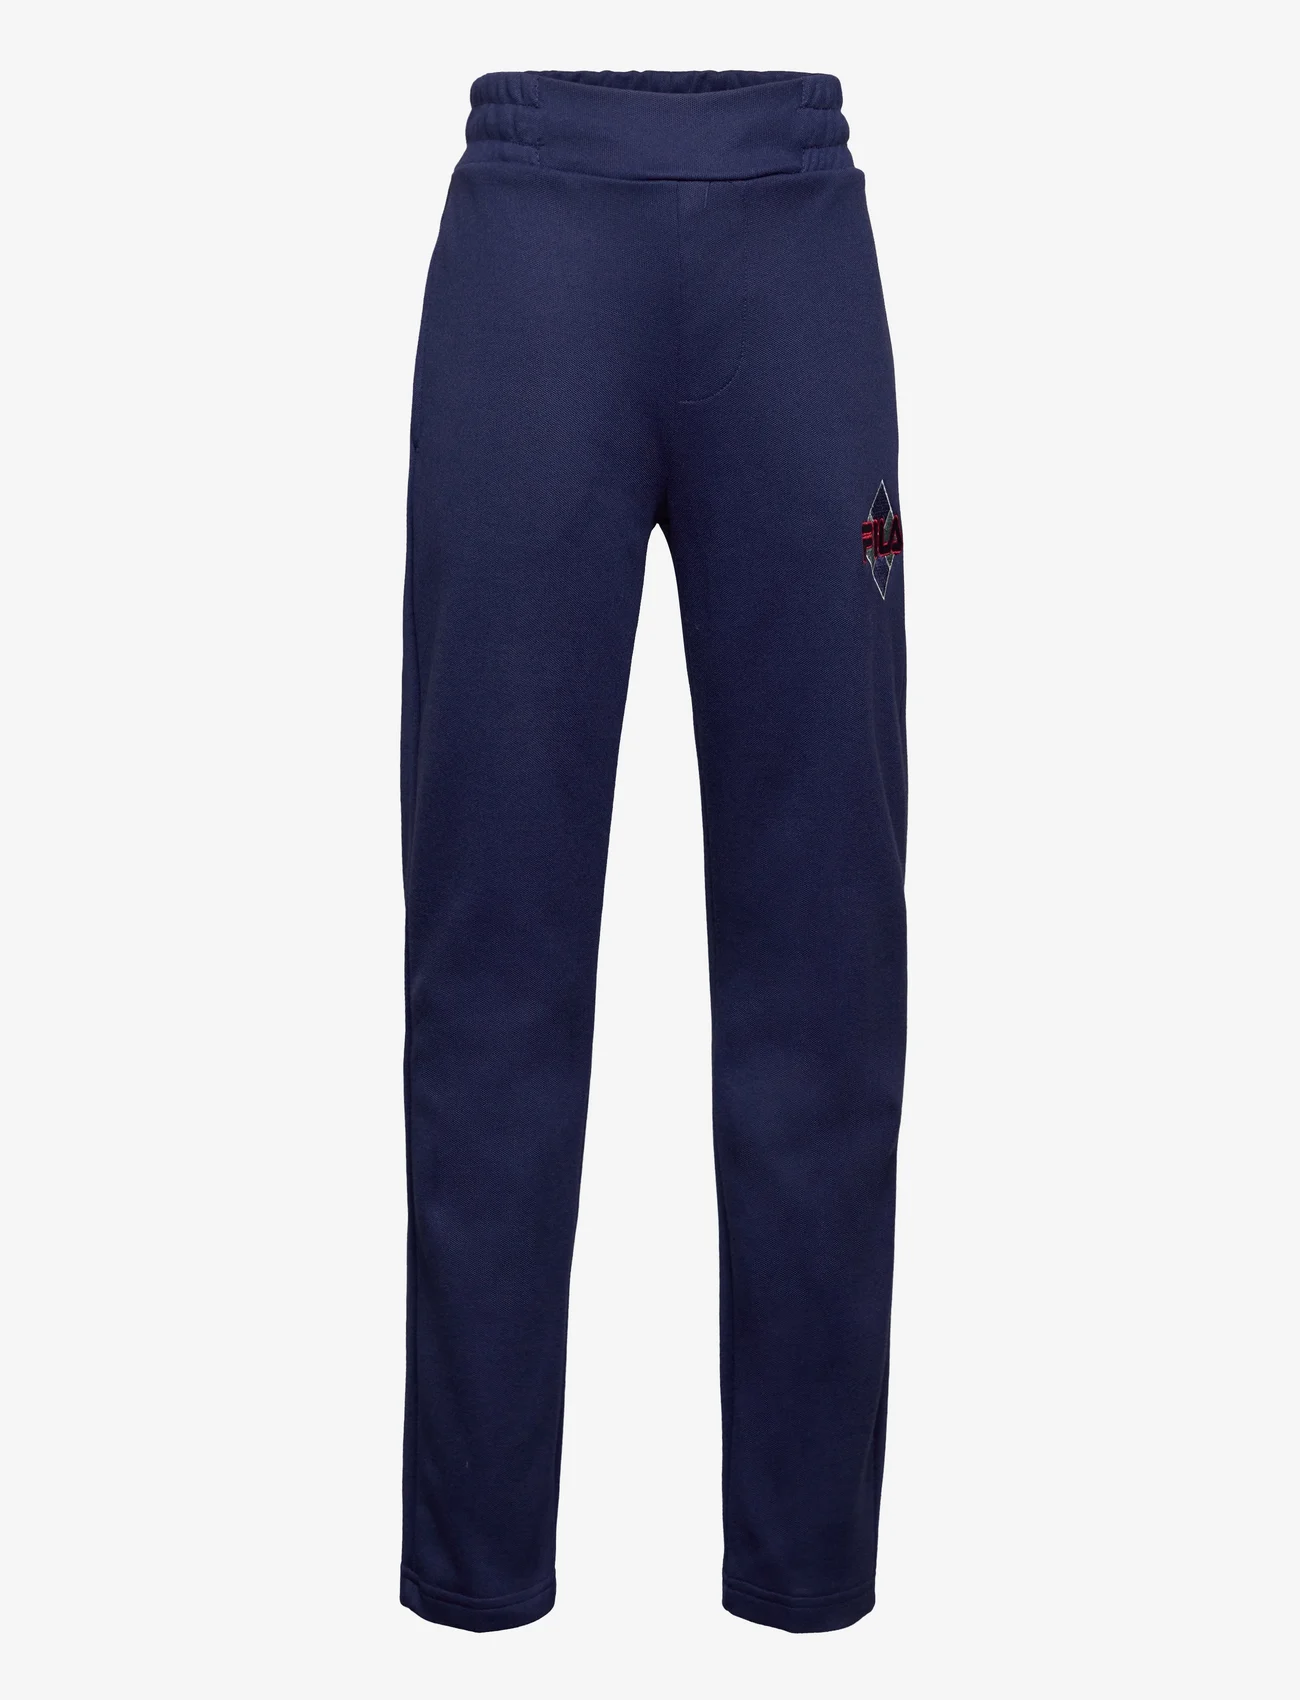 FILA - TEUCHERN trapered pique track pants - sweatpants - medieval blue - 0